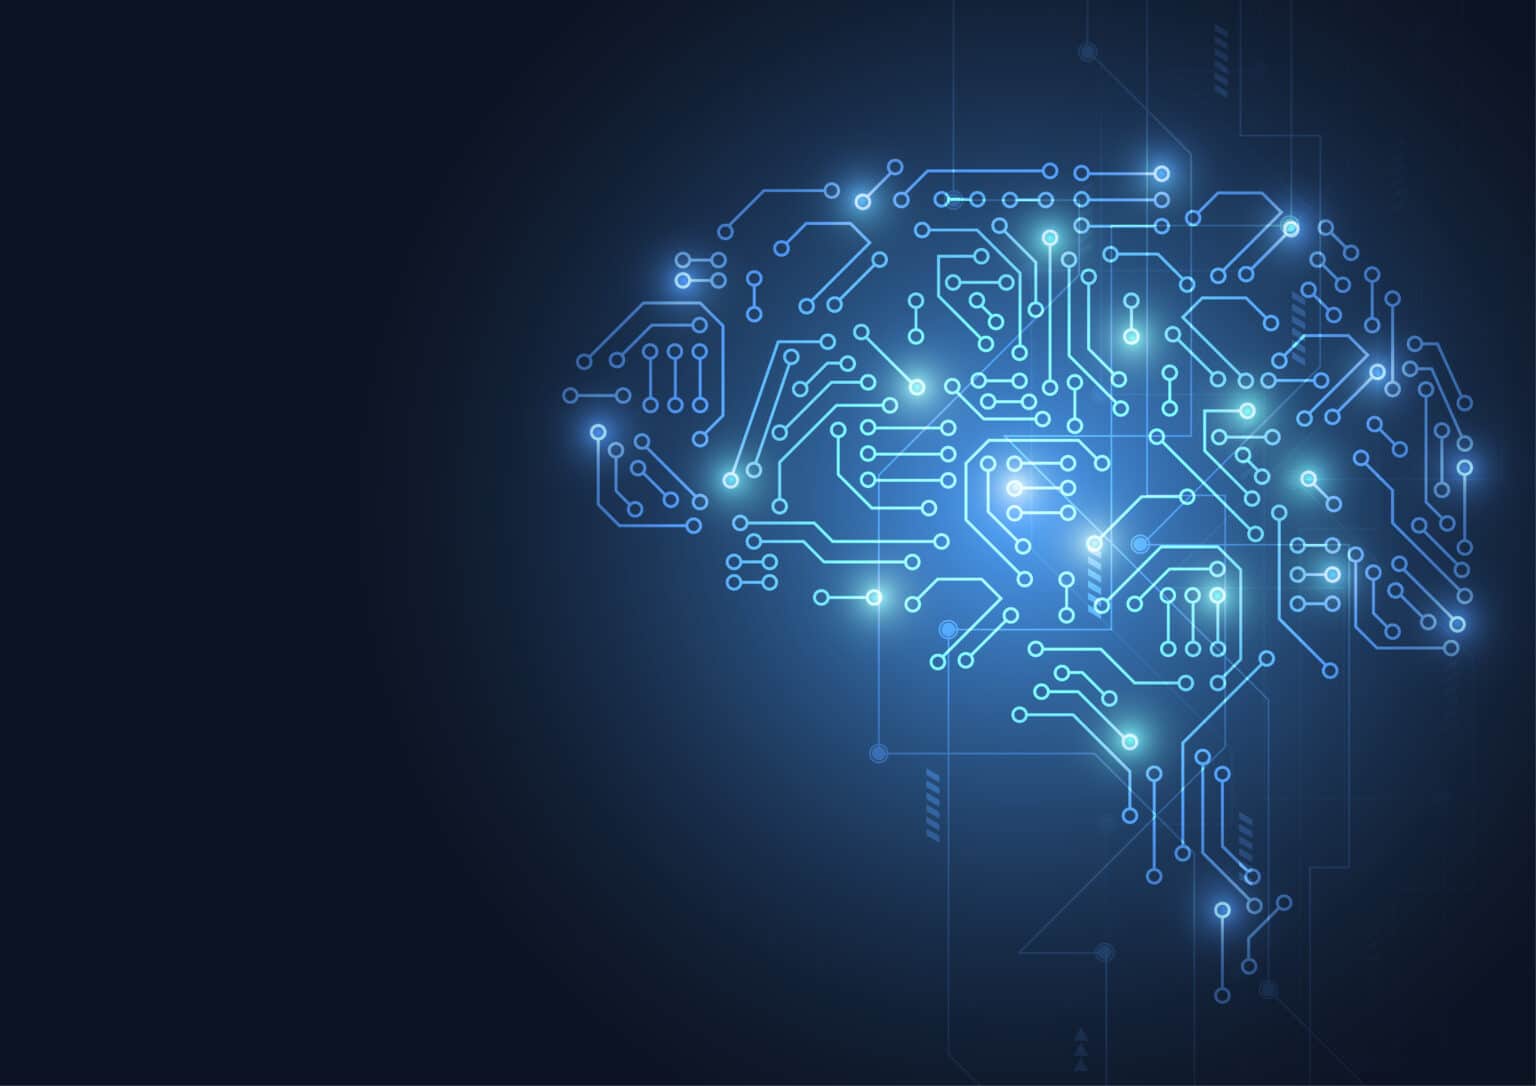 Technological brain - risk management framework for AI from NIST